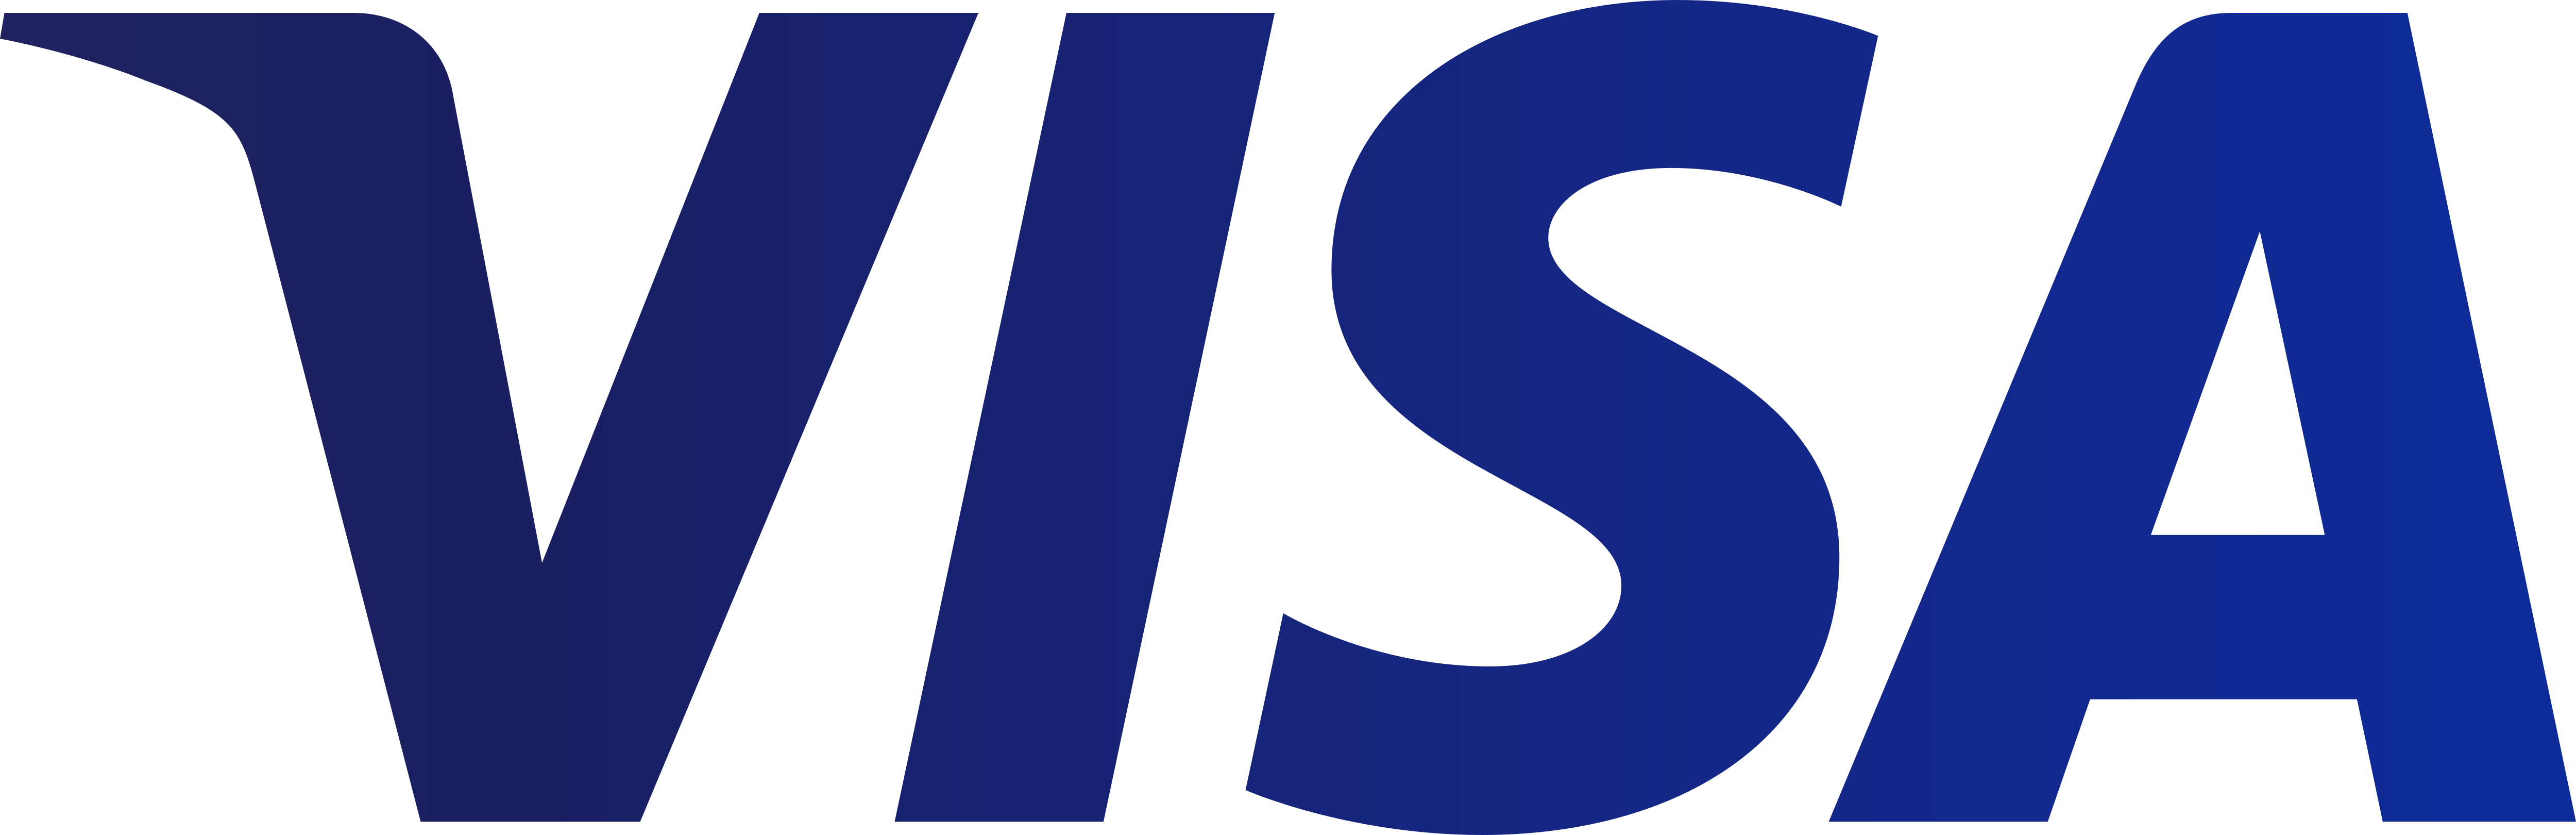 VISA – Logos Download